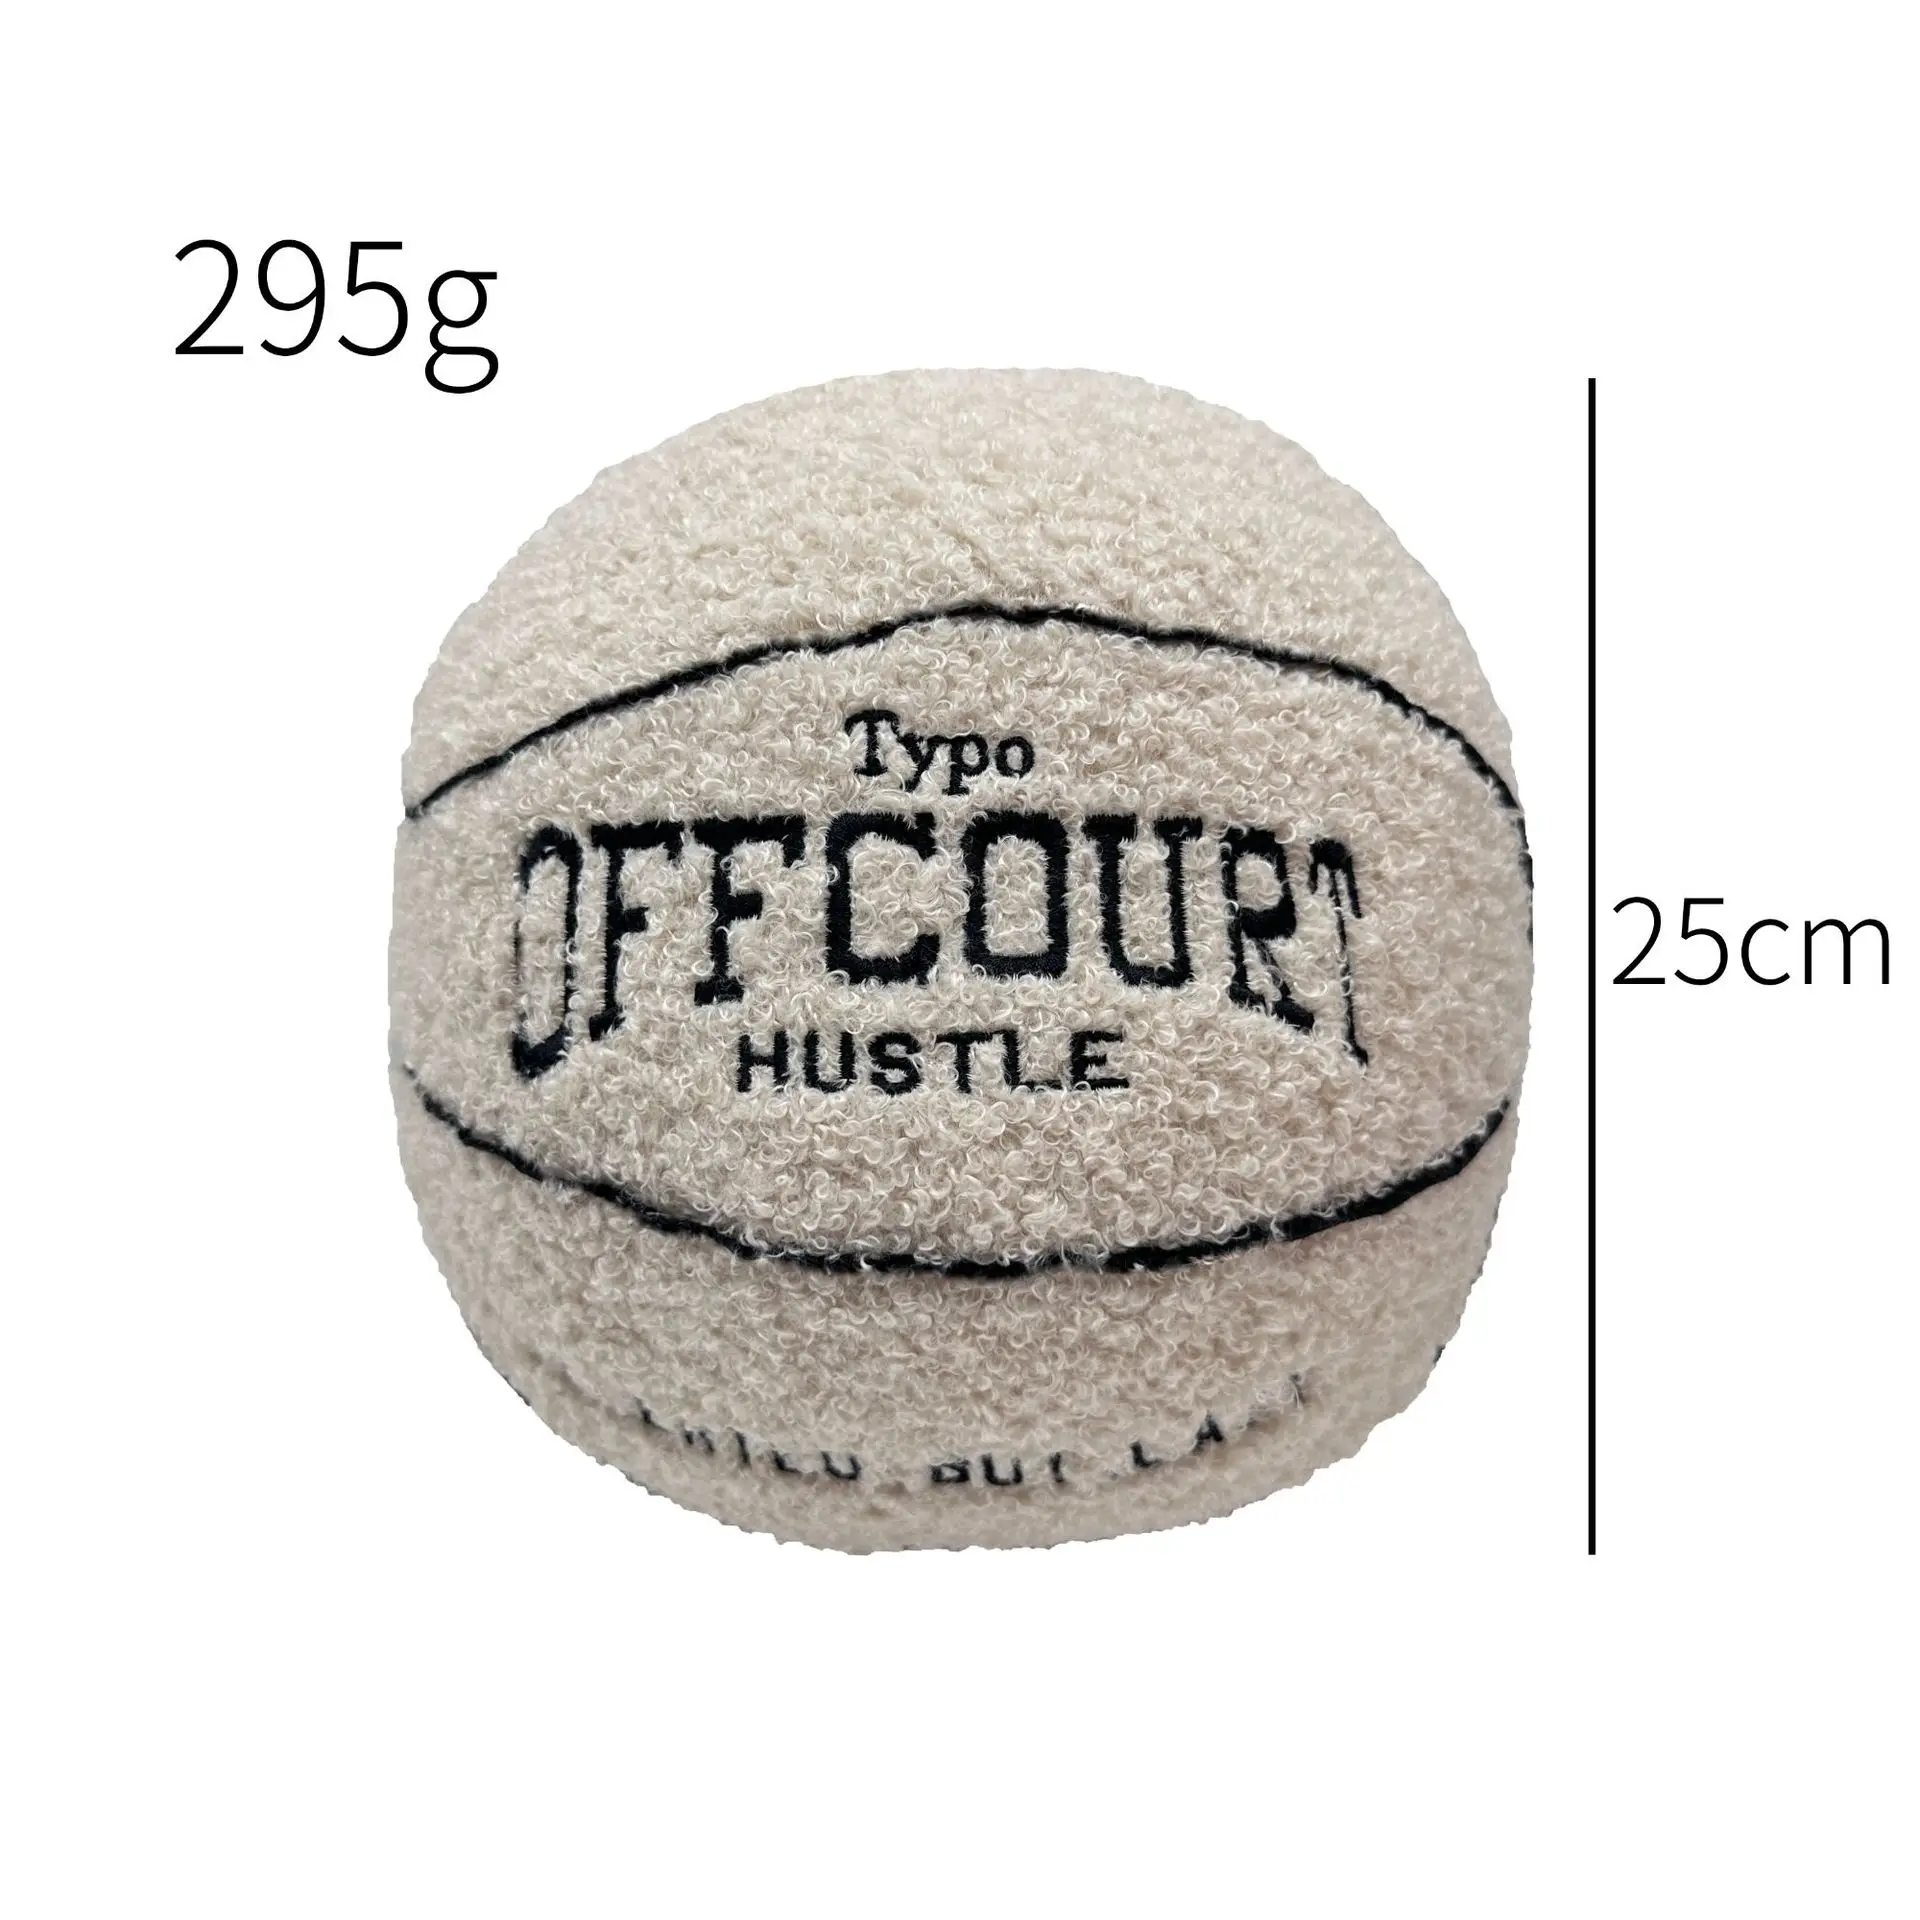 2024 Cross-border Stuffed new basketball pillow Soft plush toy doll Pillow For Gift